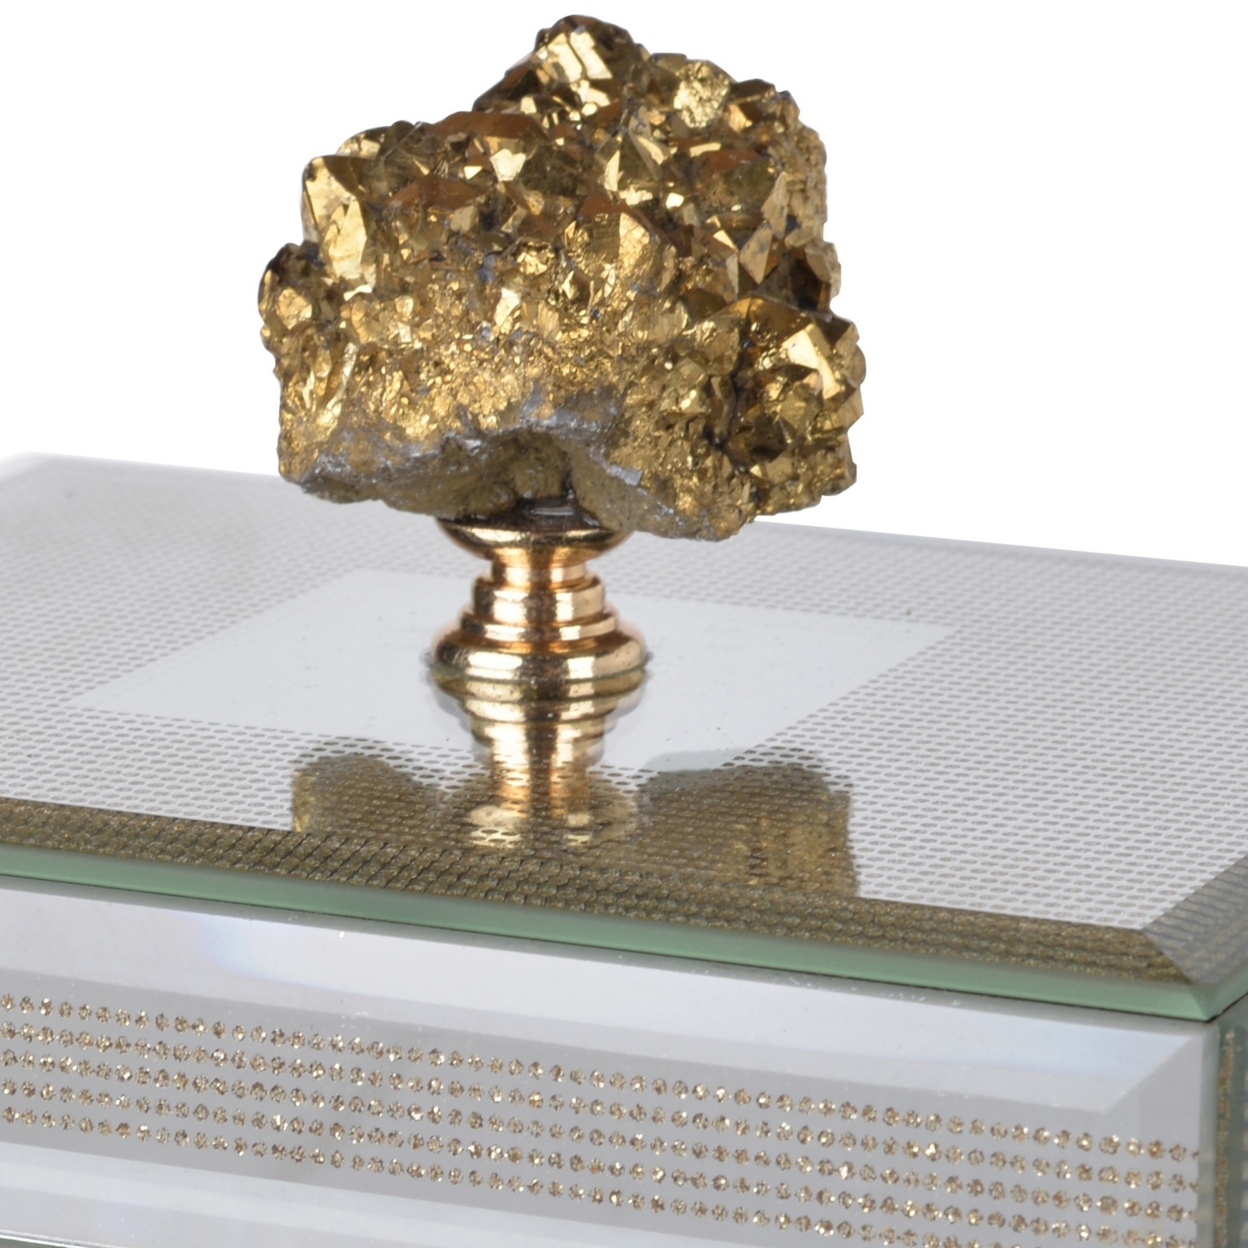 Eve 6 Inch Decorative Accessory Box, Elegant, Mirrored, Stone Accent Chrome- Saltoro Sherpi